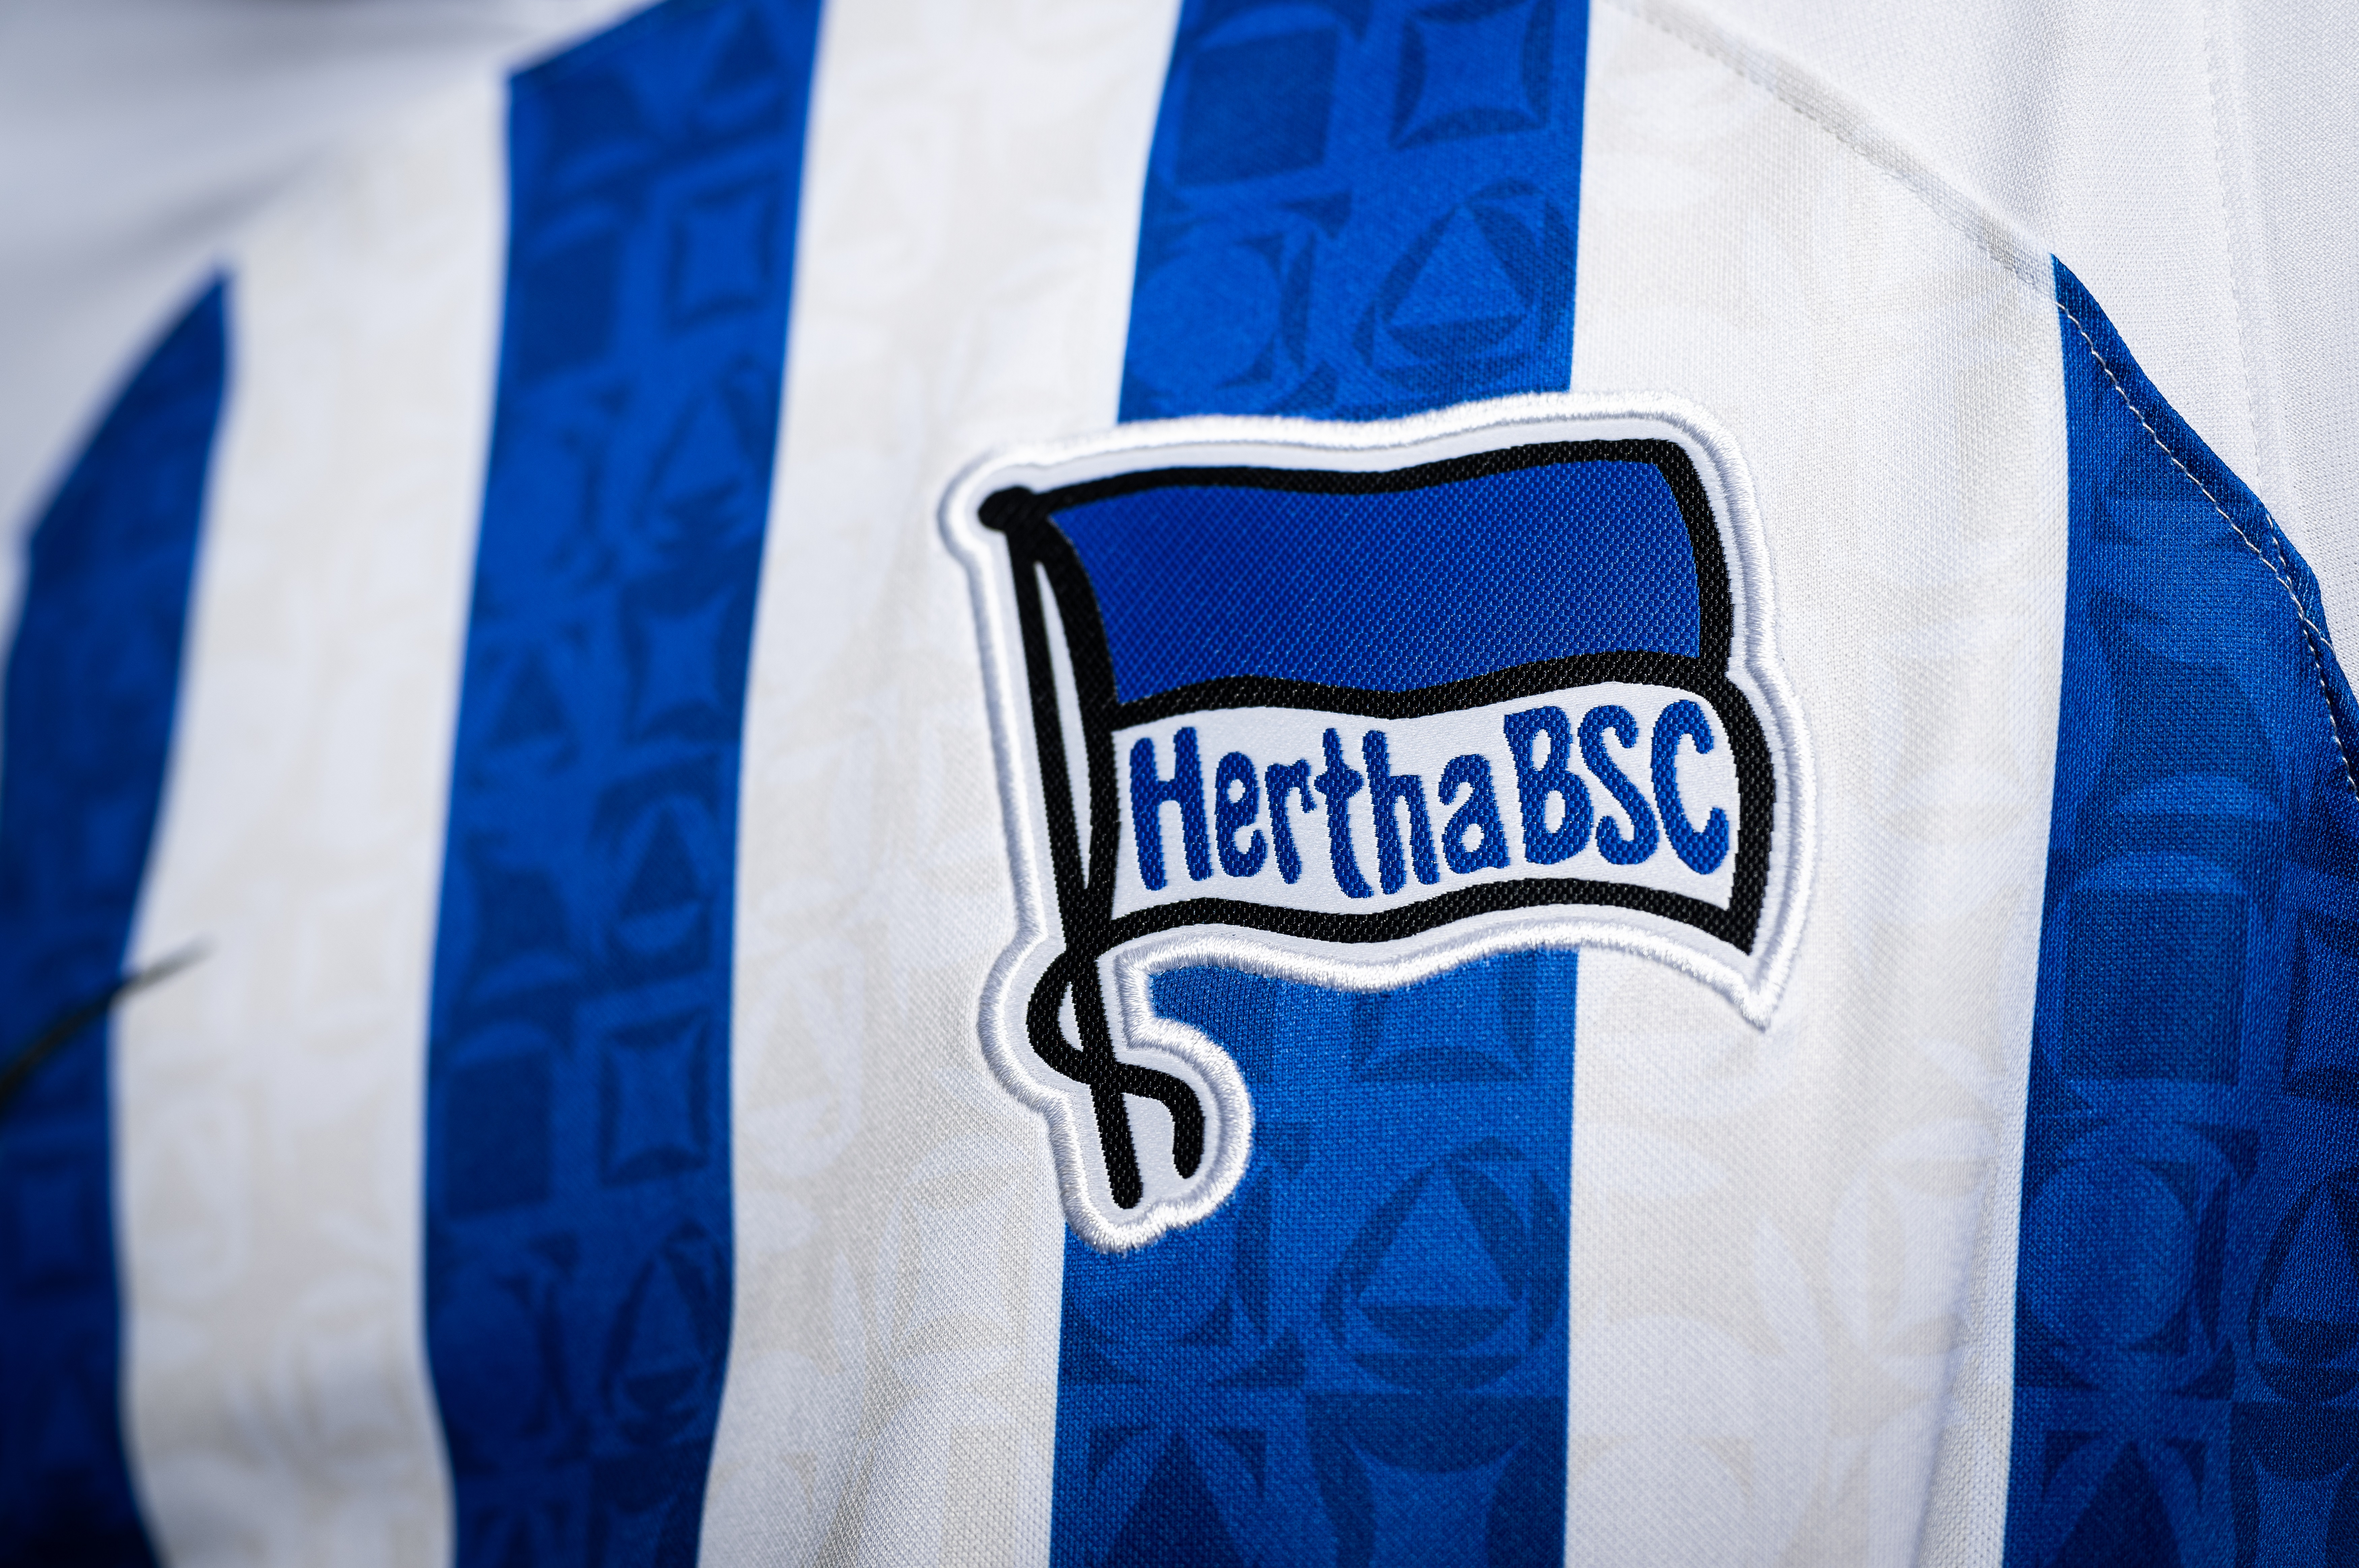 The Hertha logo on the home shirt.